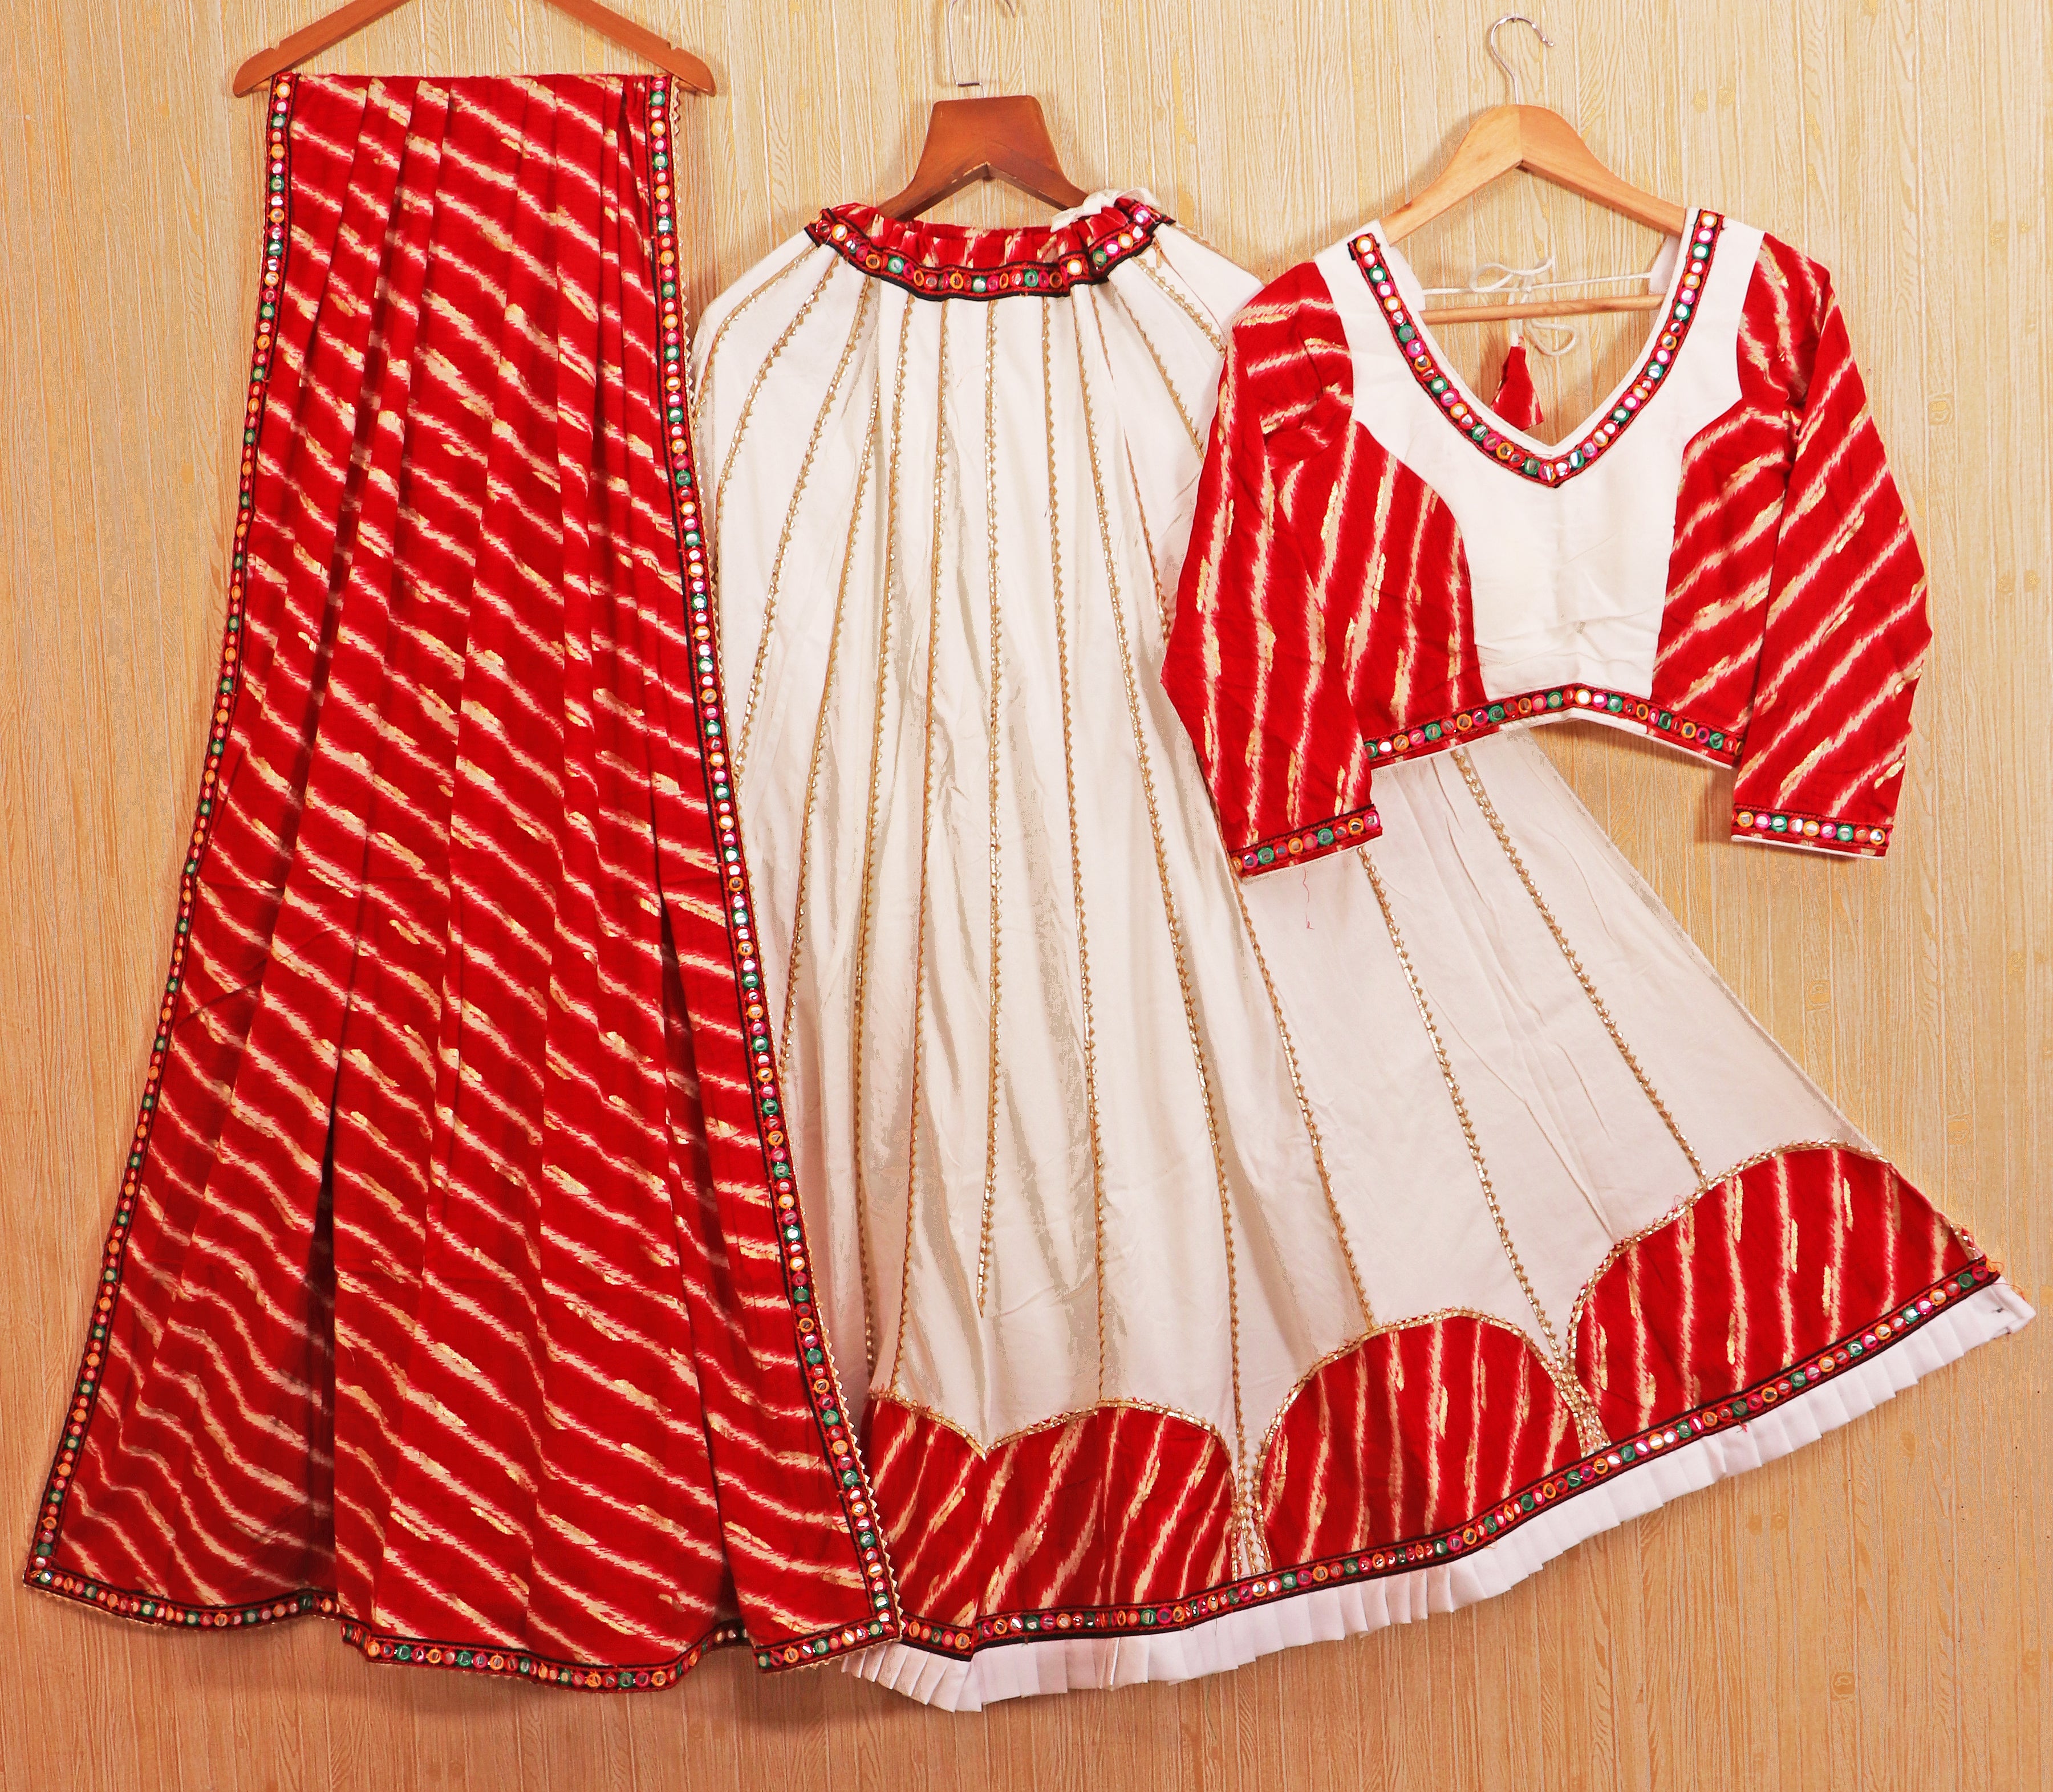 Indian Gujarati Dress Stock Photo 1301959123 | Shutterstock